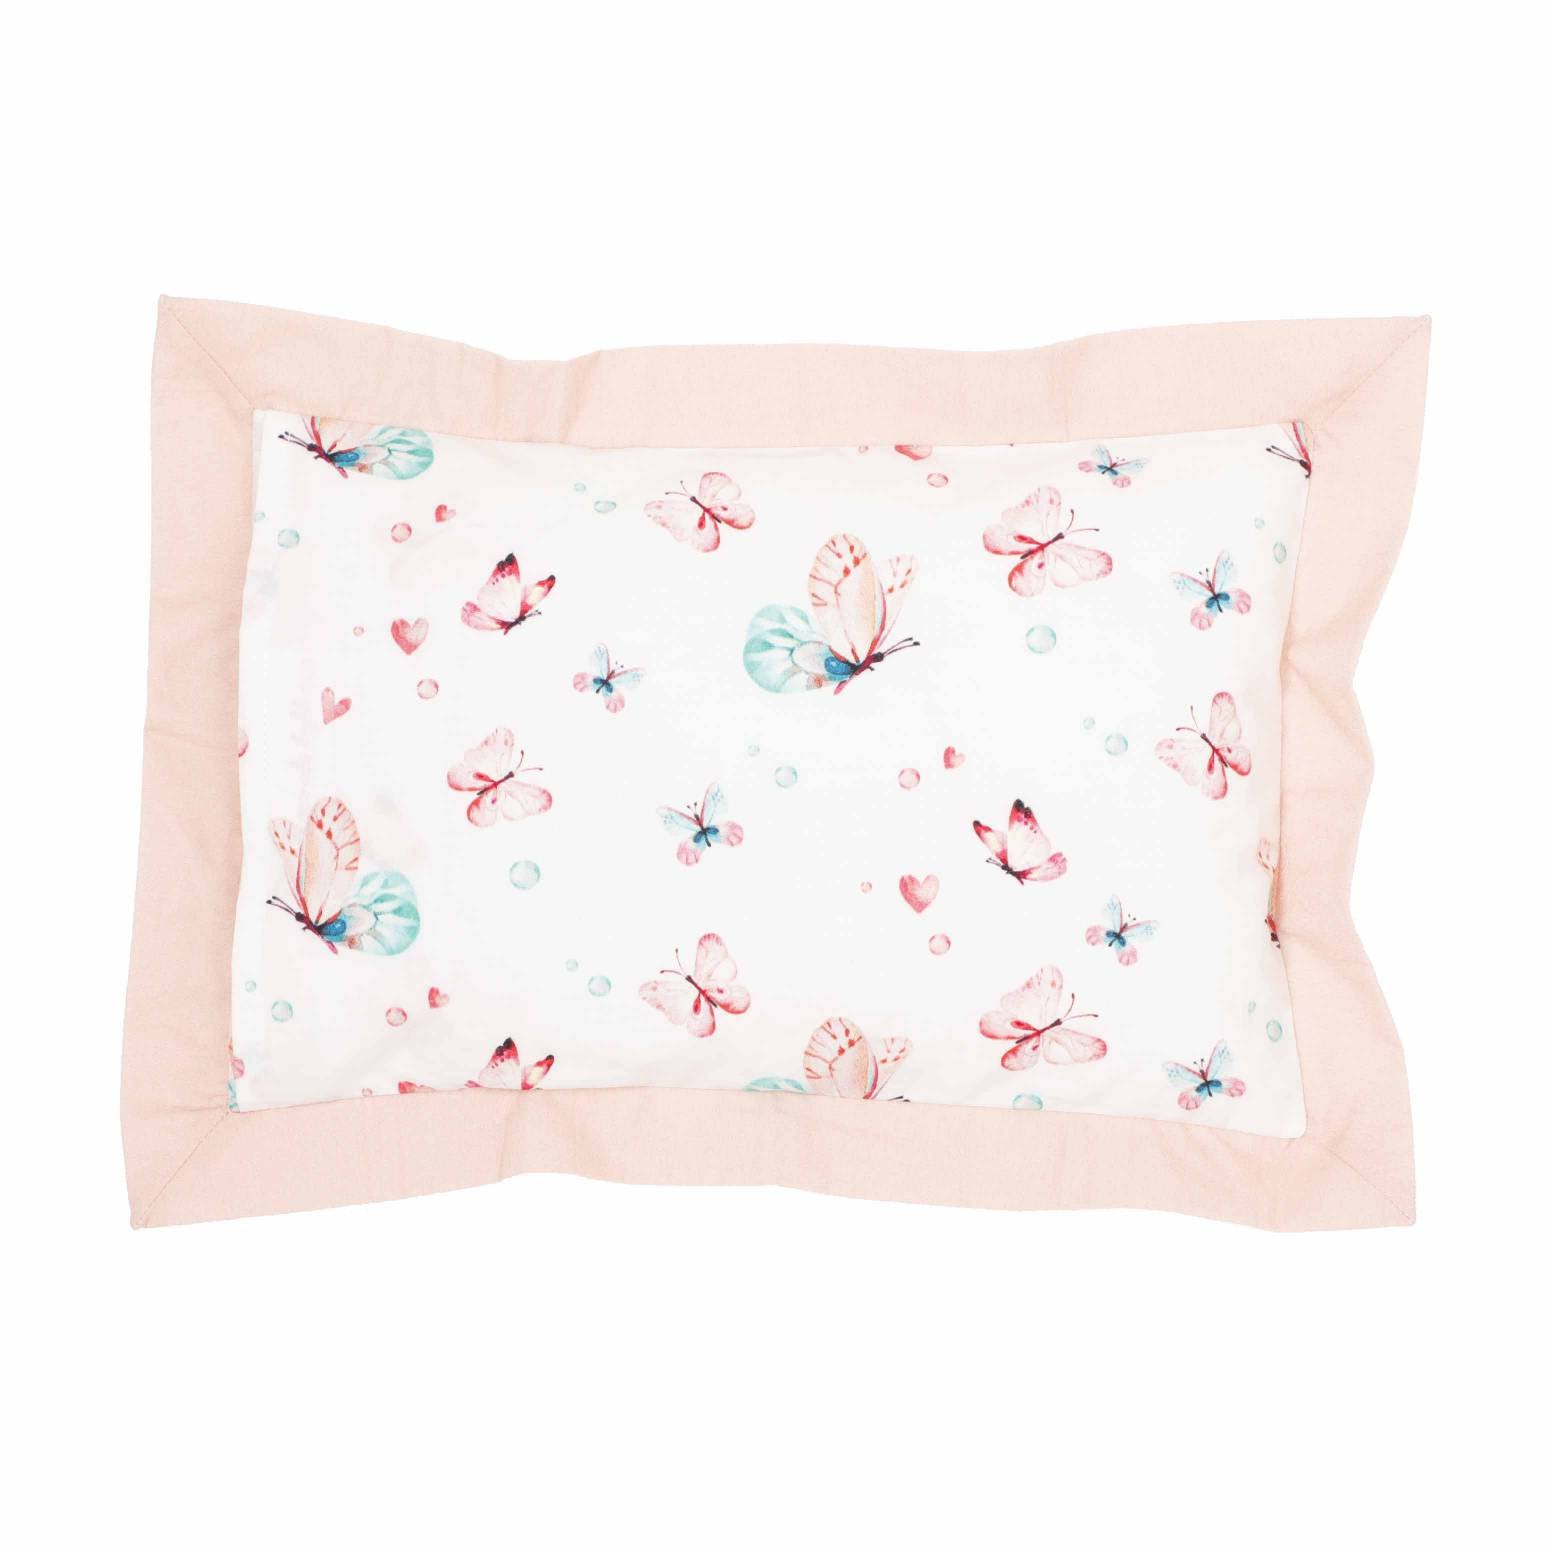 Fiora the Fairy - Baby Pillow